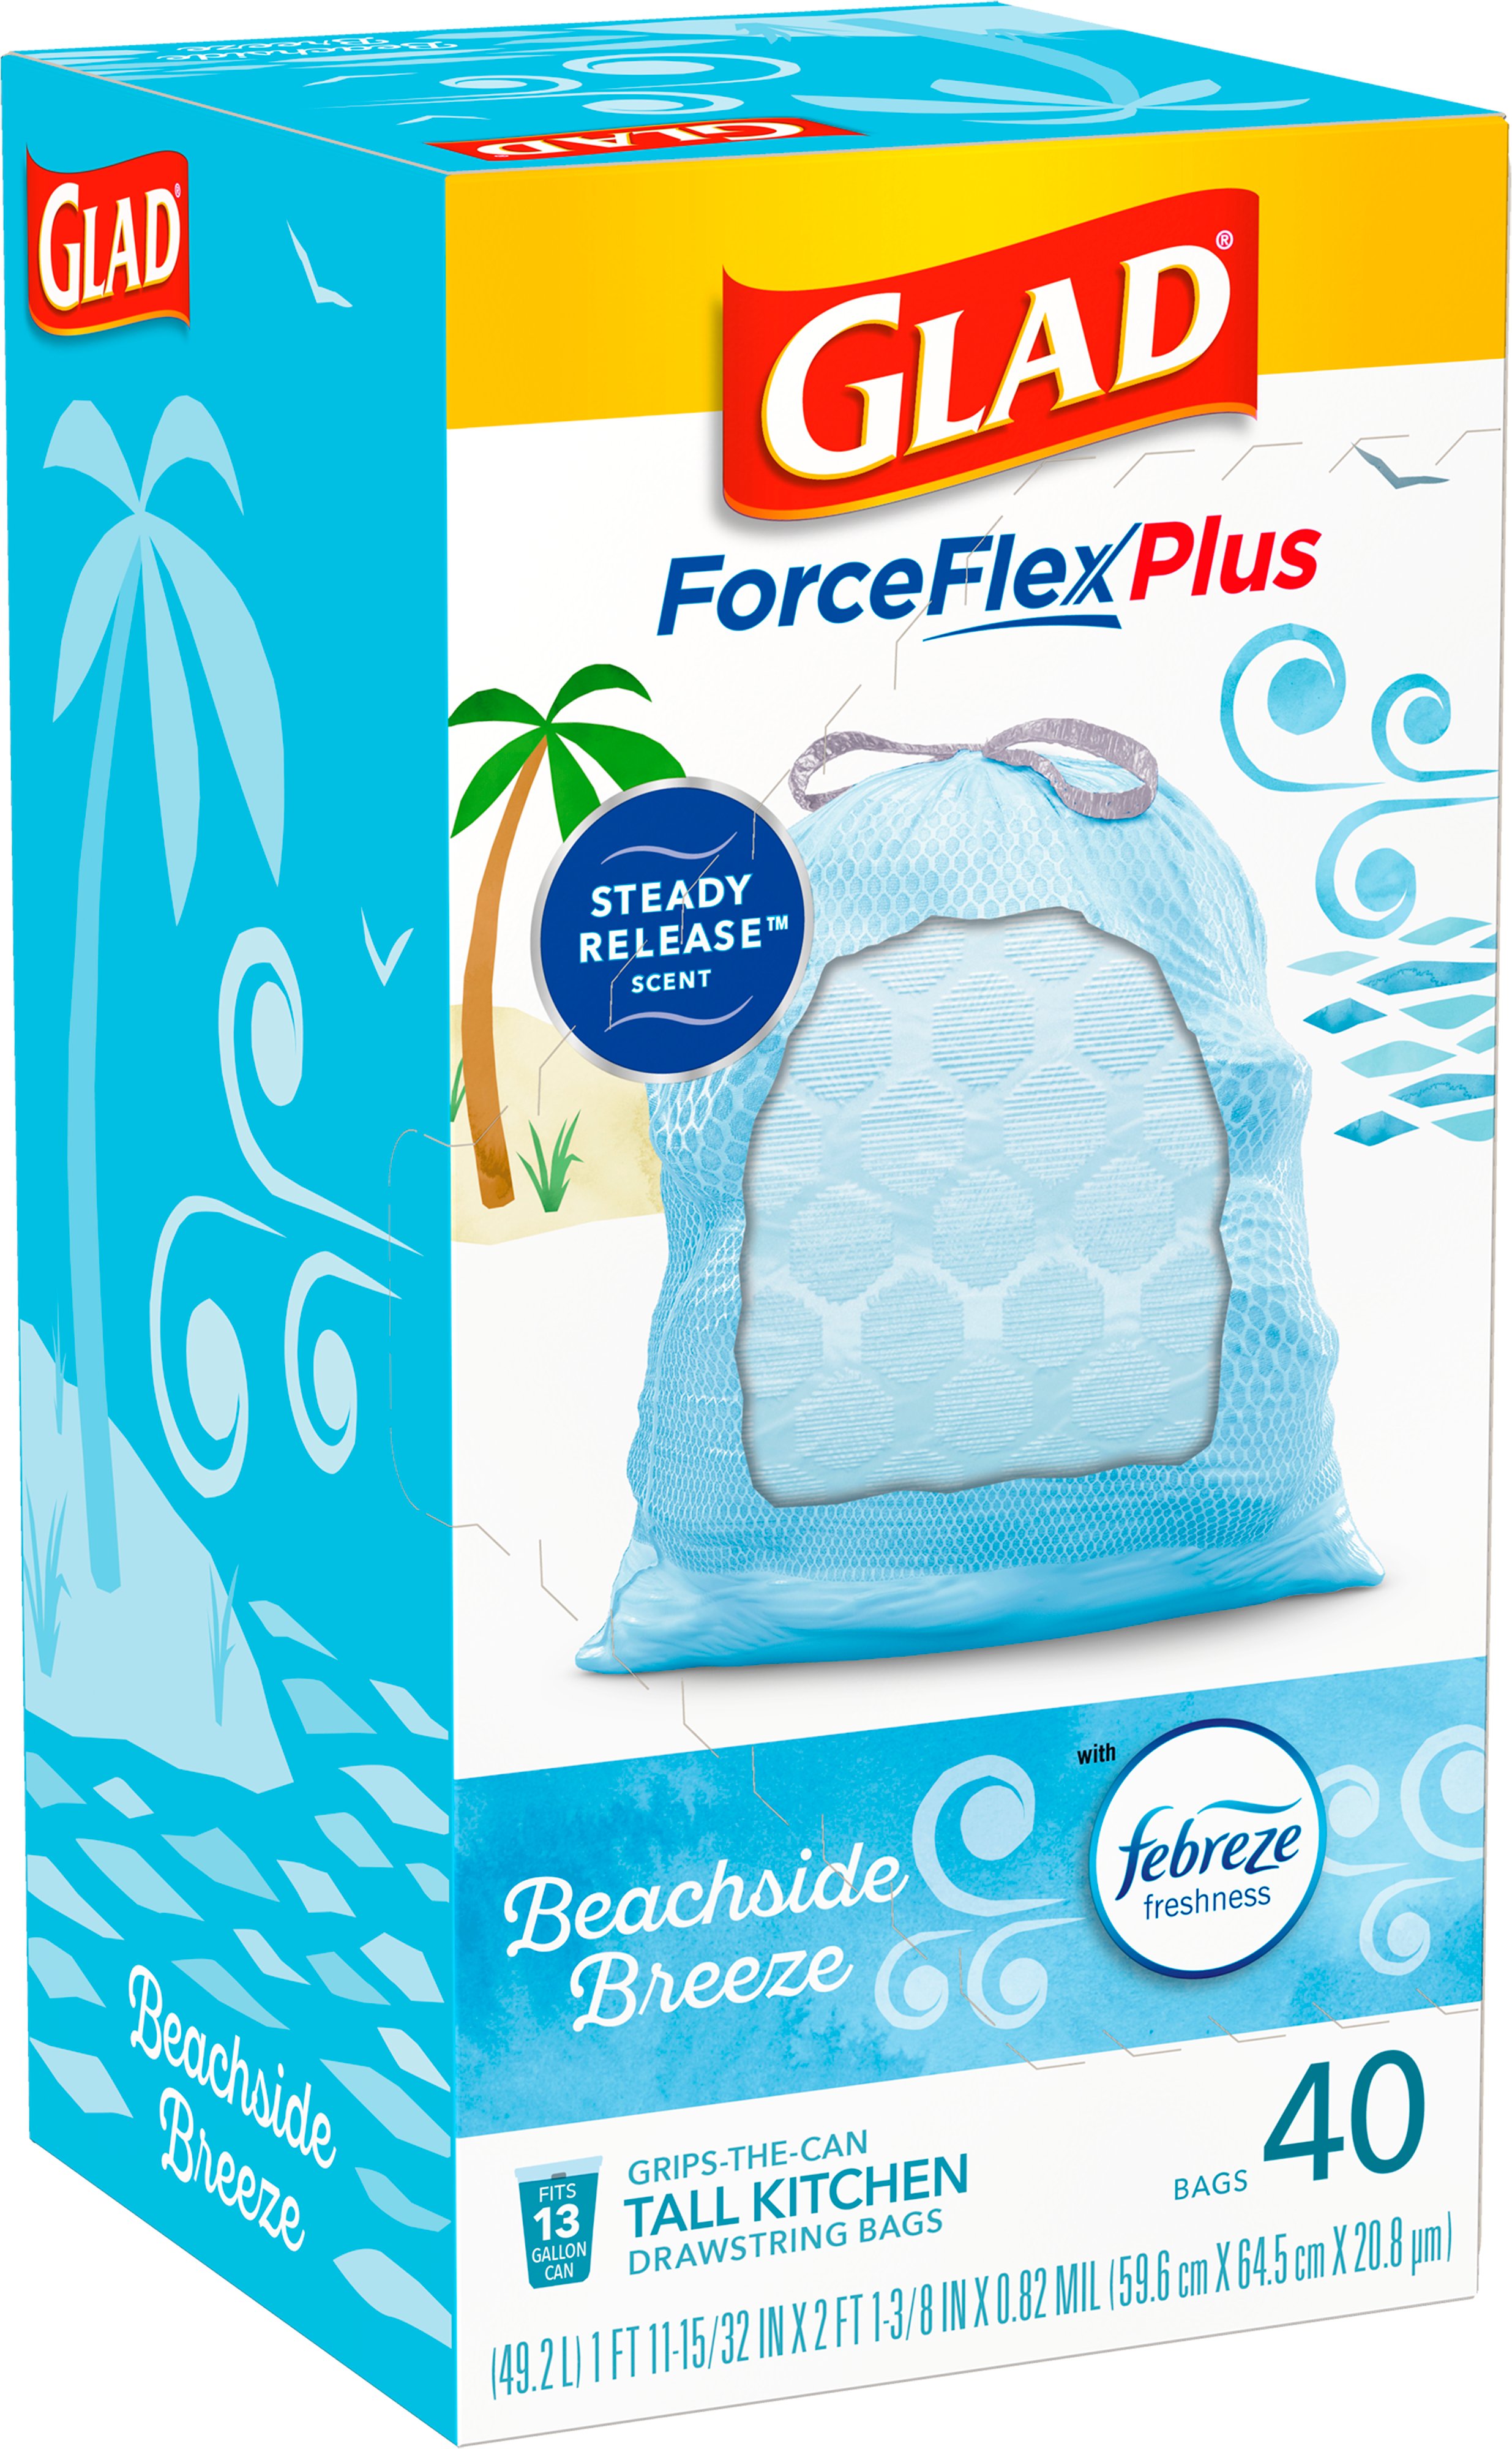 Glad ForceFlexPlus Tall Kitchen Trash Bags, 13 Gallon, 40 Bags (Beachside Breeze Scent, Febreze Freshness)